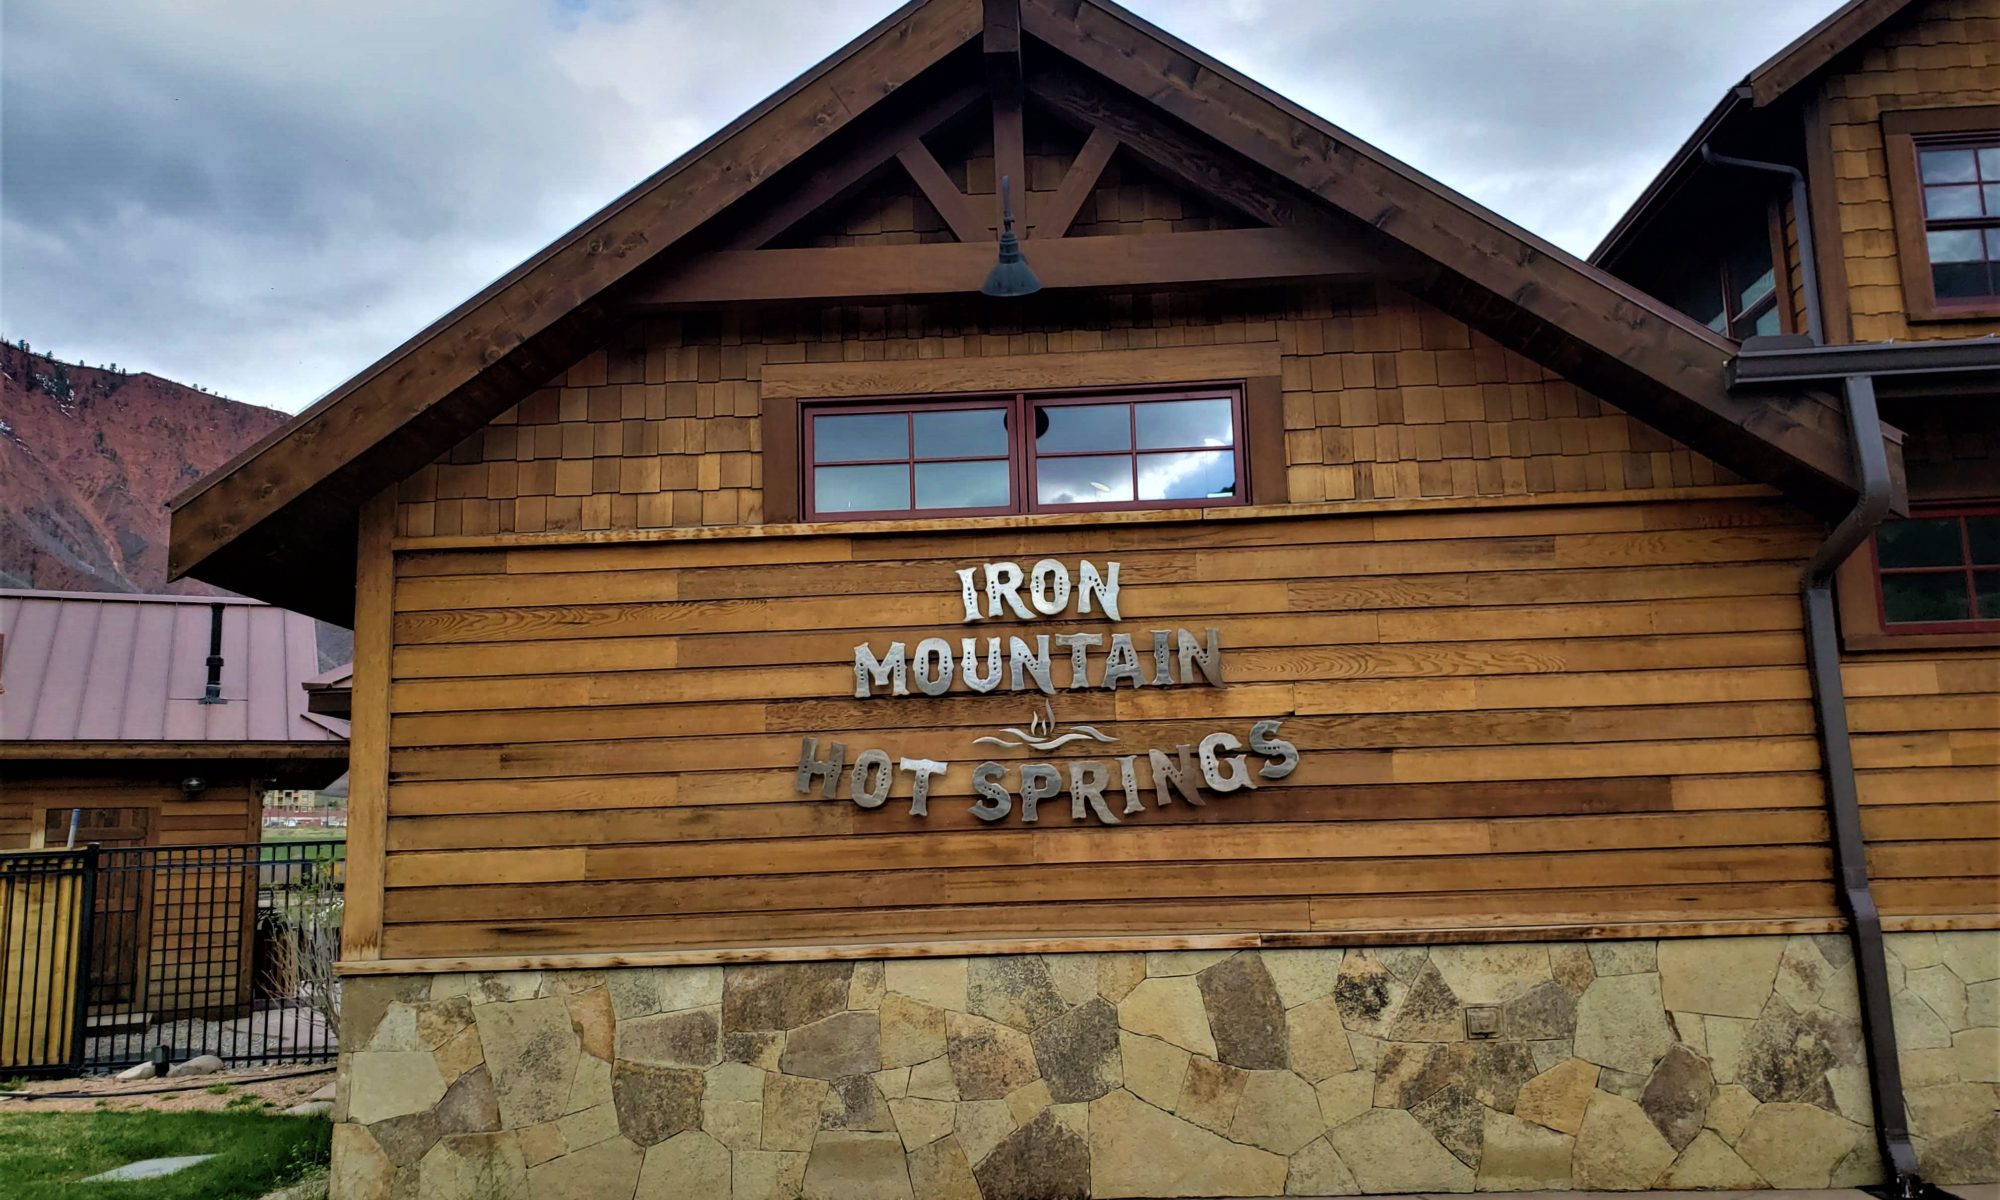 Iron Mountain Hot Springs in Glenwood Springs, CO